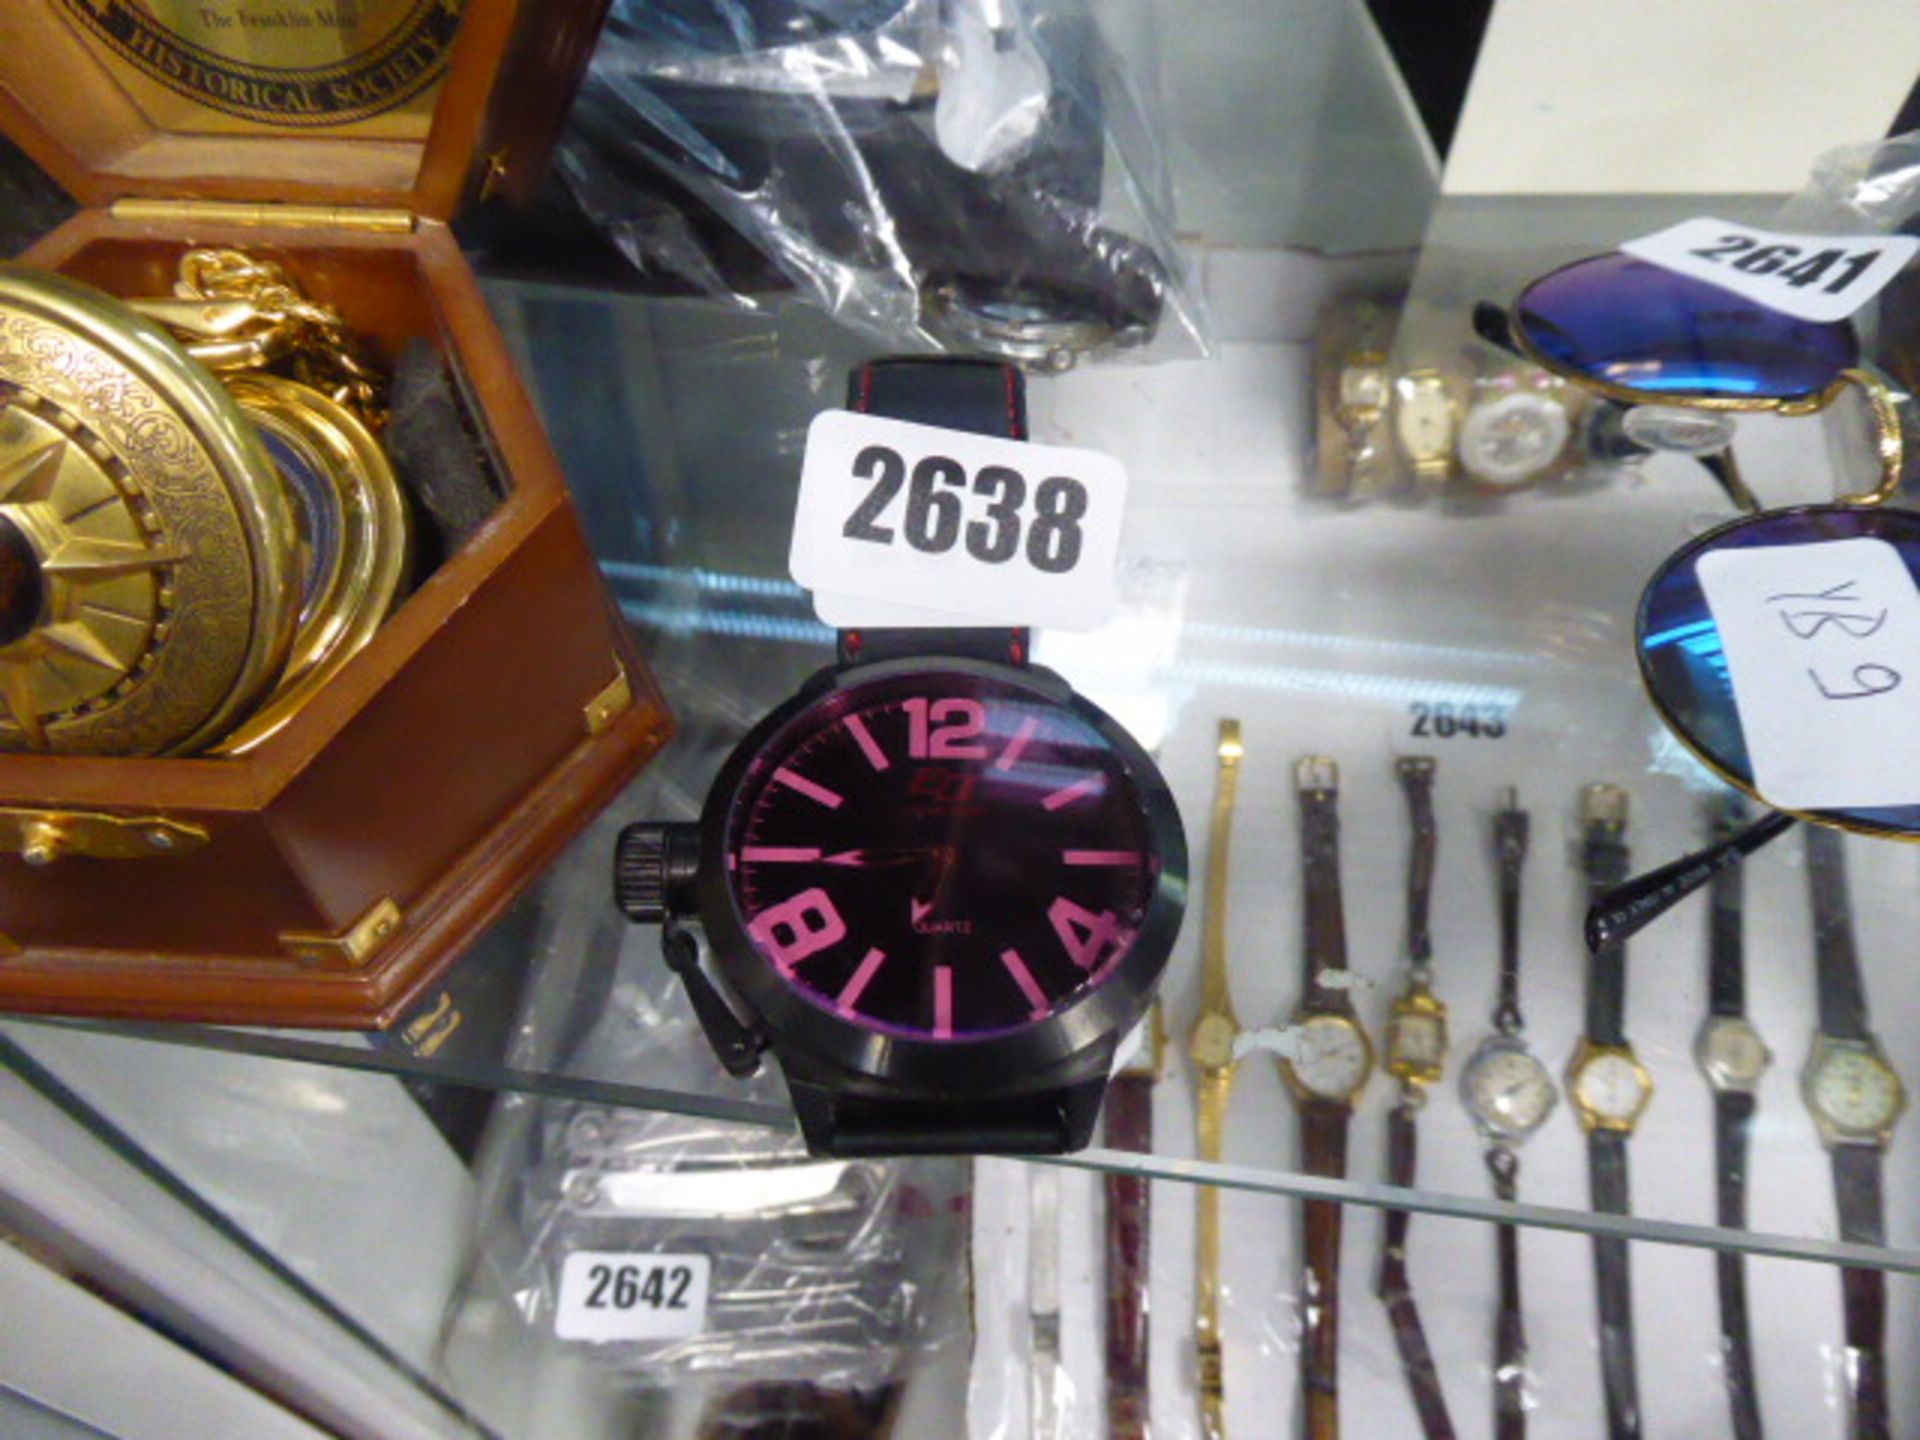 2360 EO Quartz wrist watch with black leather strap